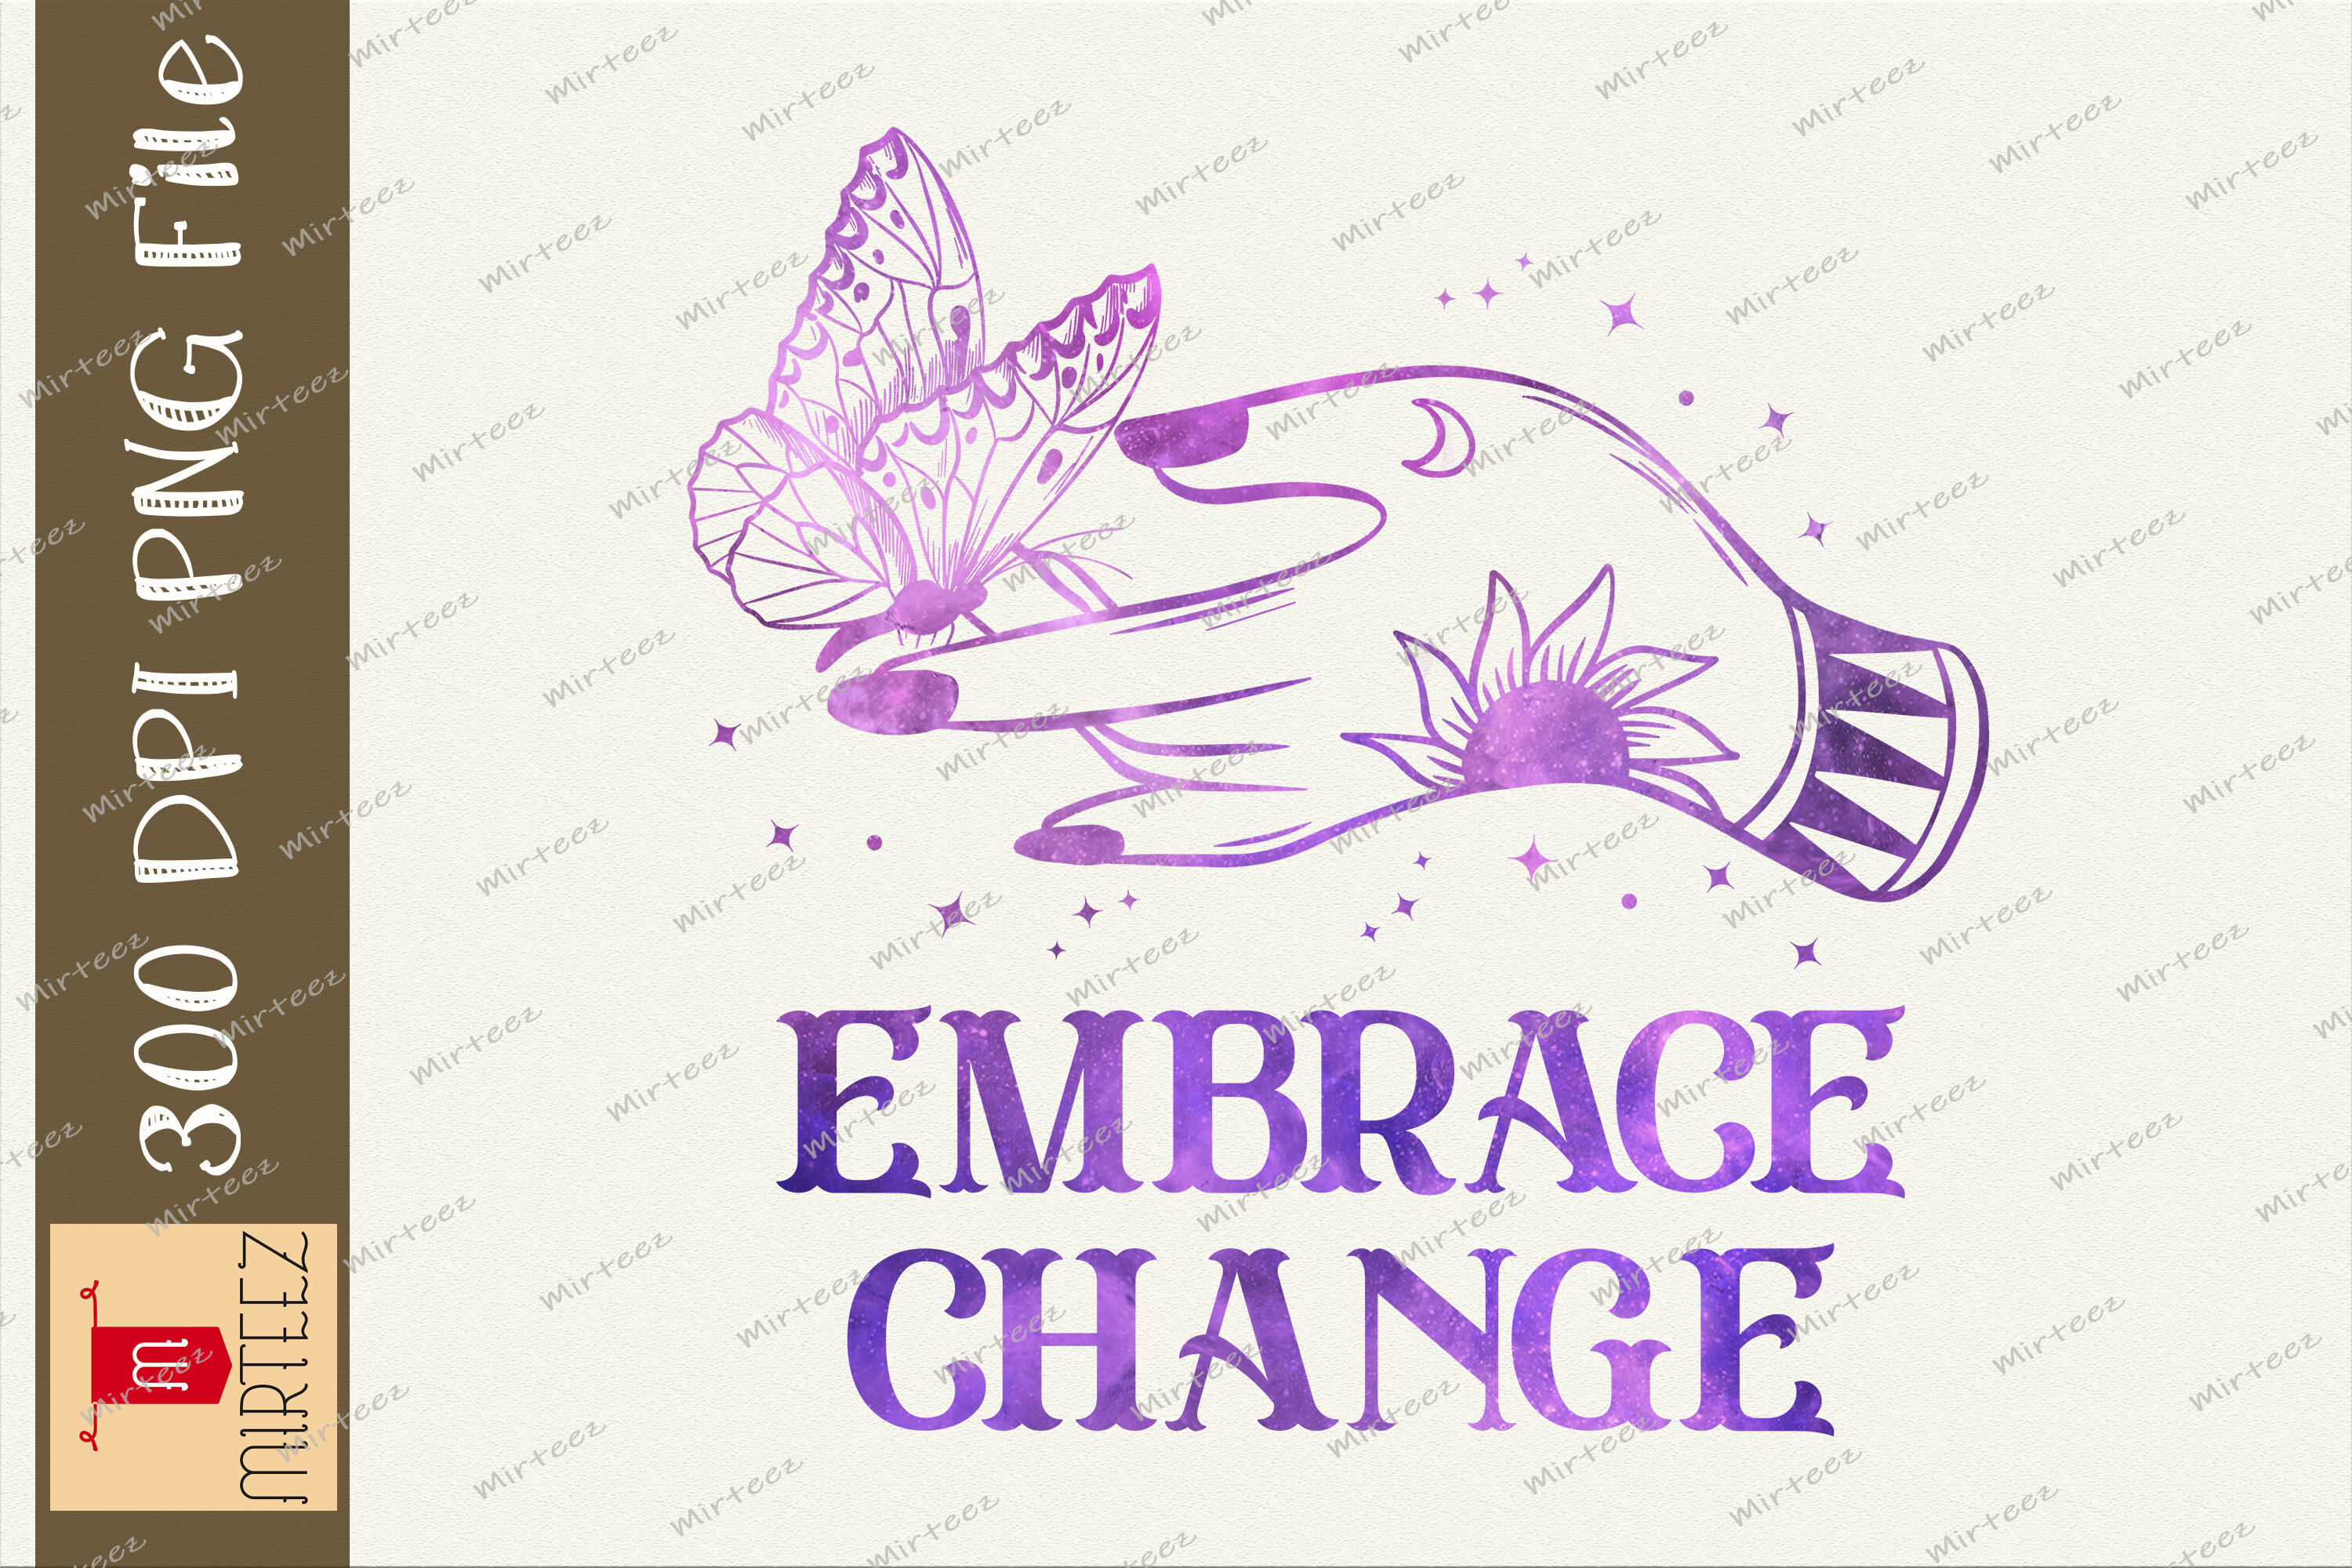 embrace change butterfly